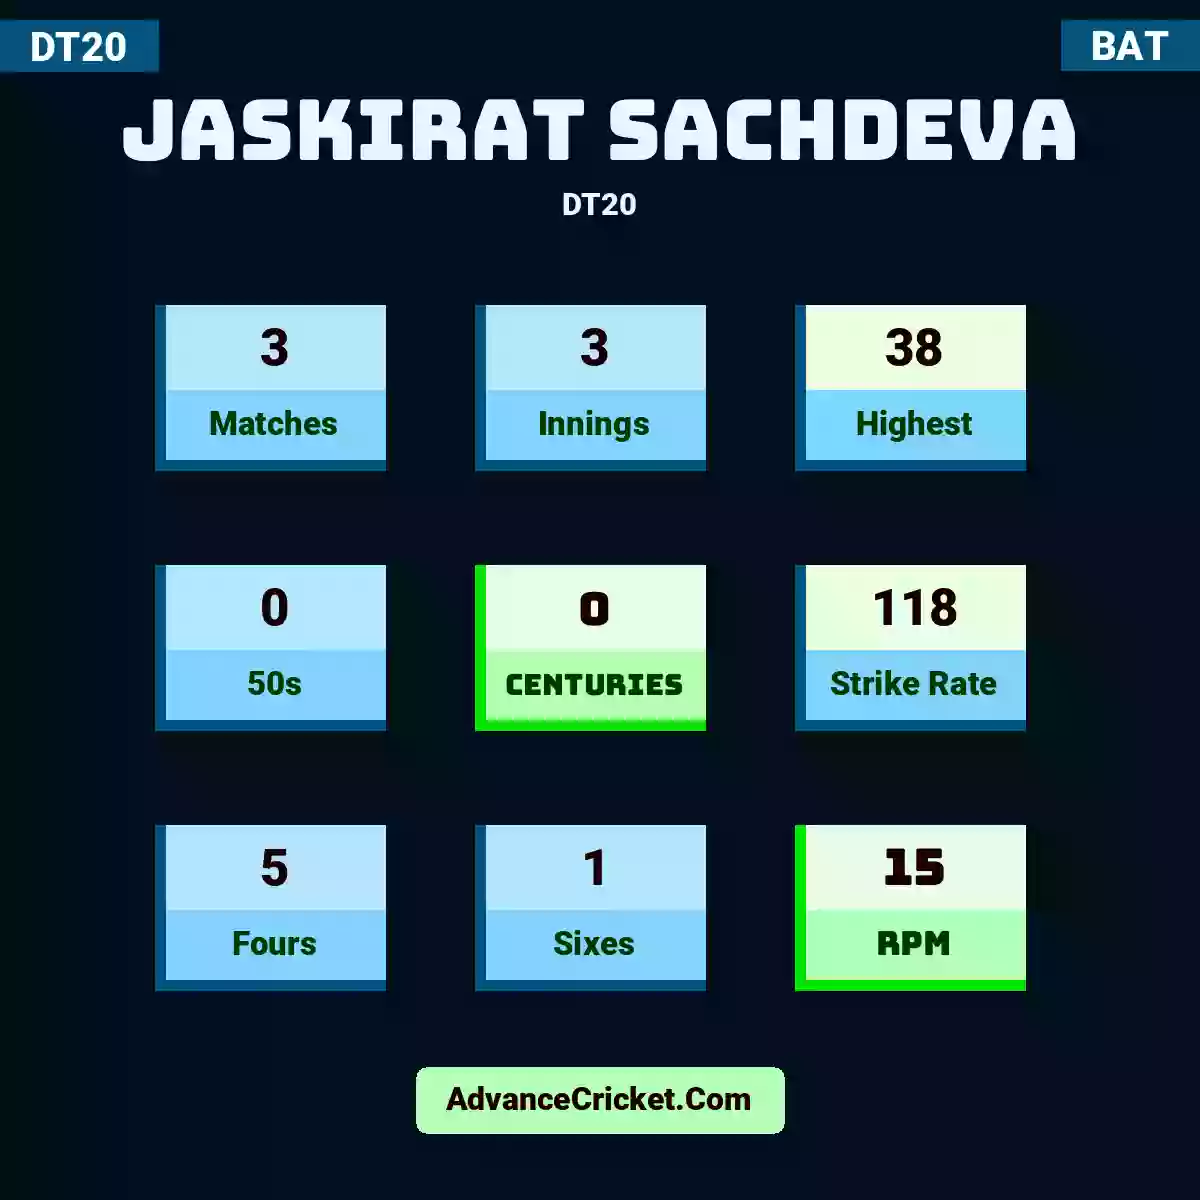 Jaskirat Sachdeva DT20 , Jaskirat Sachdeva played 3 matches, scored 38 runs as highest, 0 half-centuries, and 0 centuries, with a strike rate of 118. J.Sachdeva hit 5 fours and 1 sixes, with an RPM of 15.